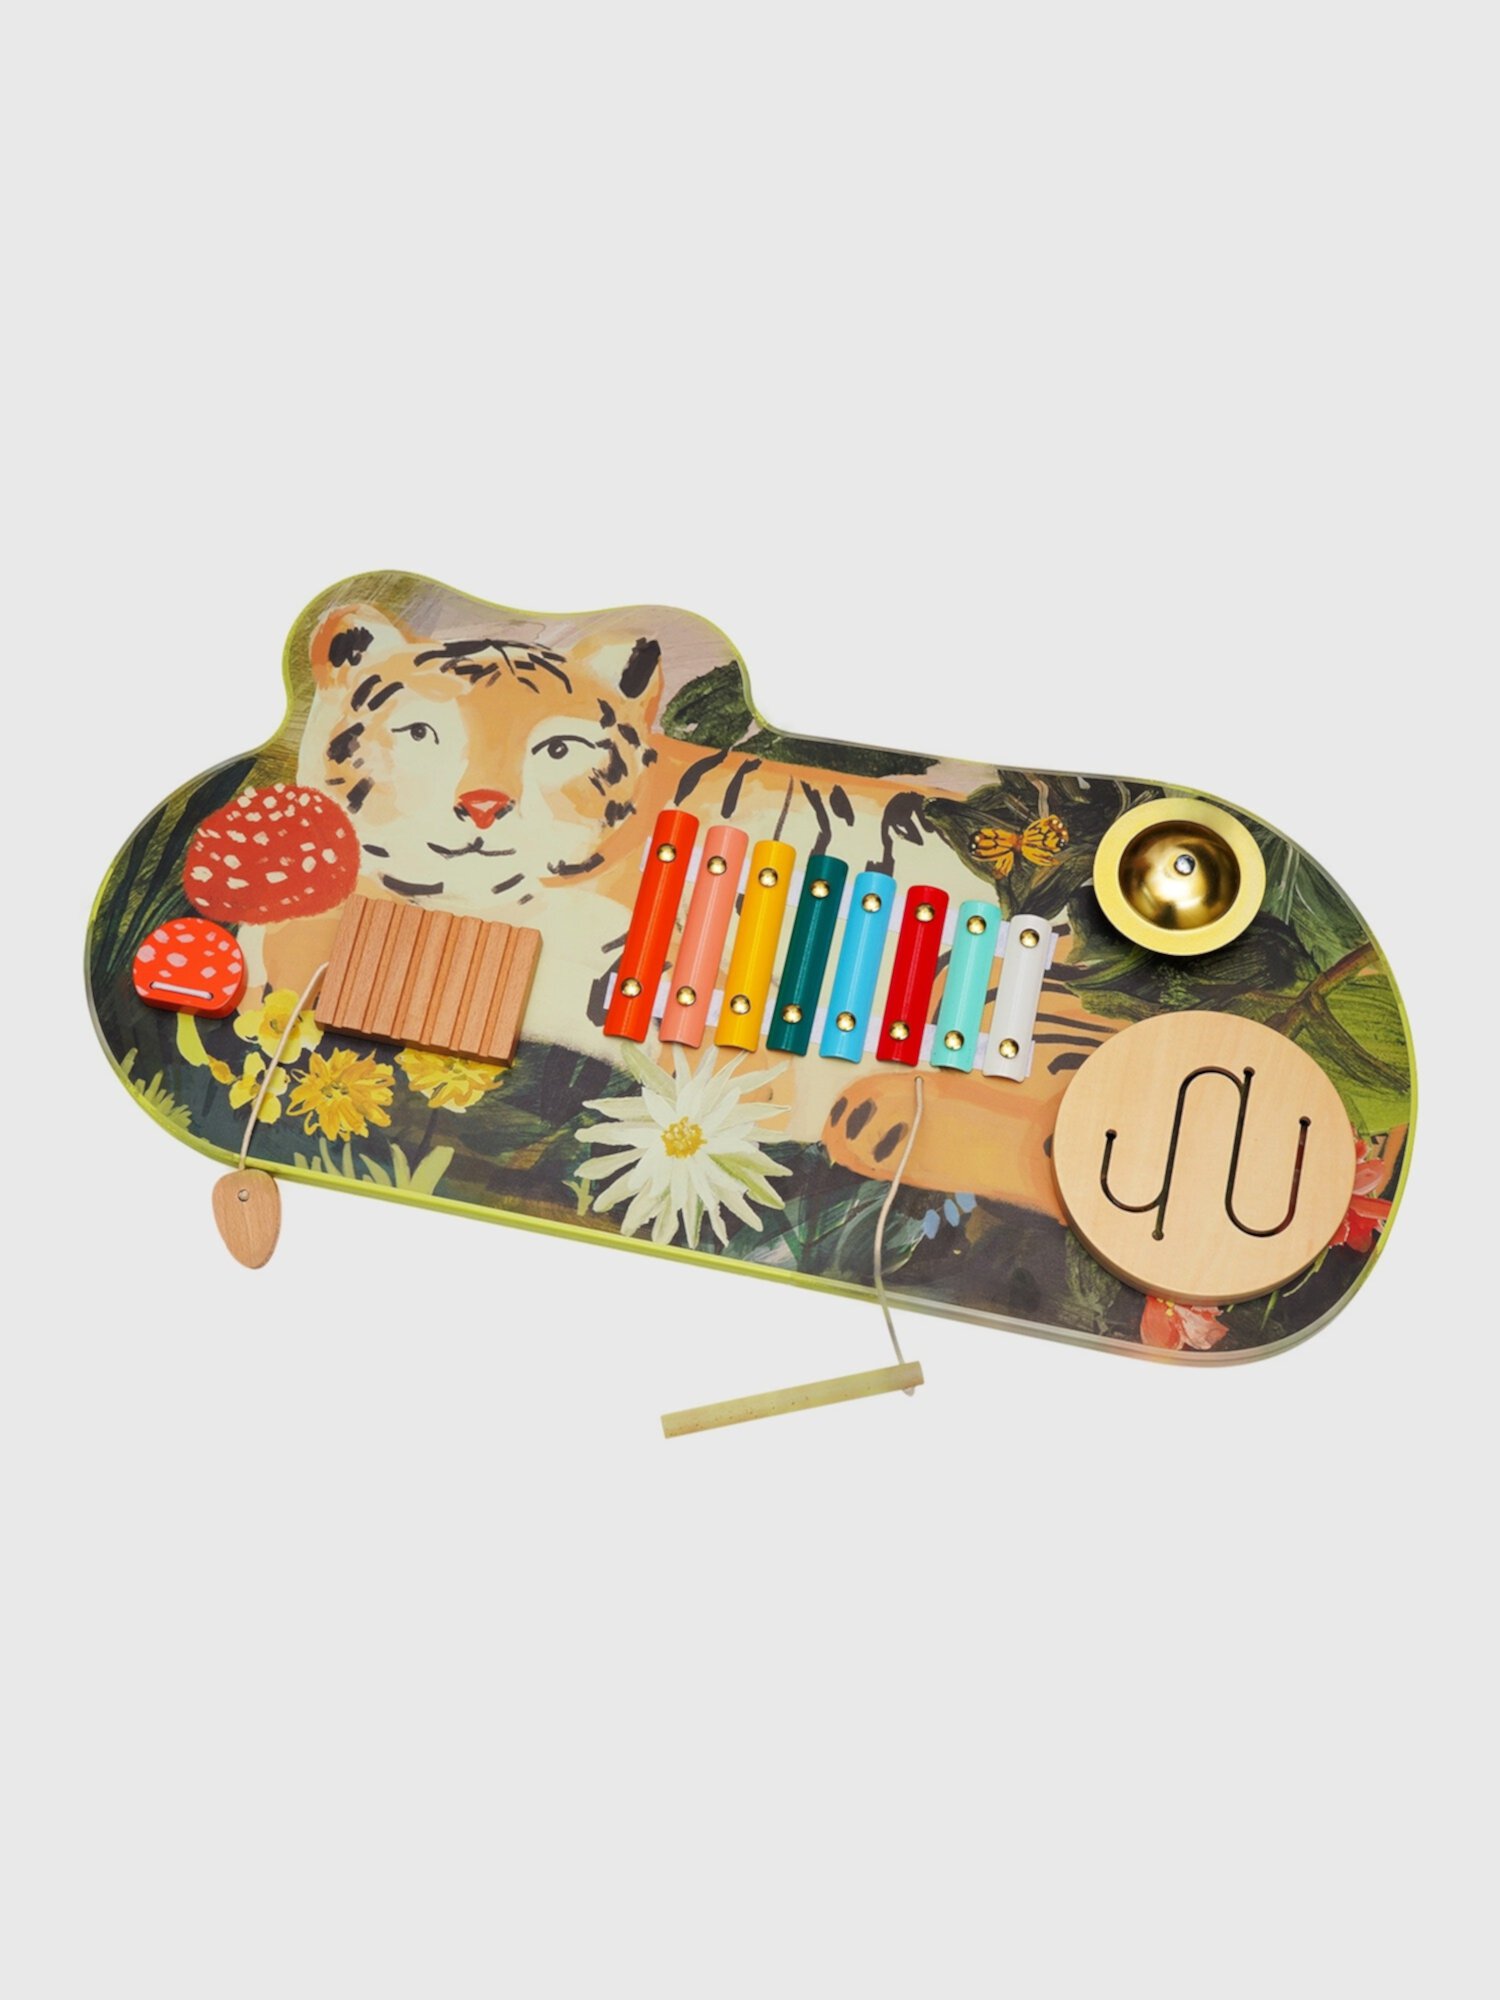 Tiger Tunes Wooden Toddler Musical Toy Instrument Gap